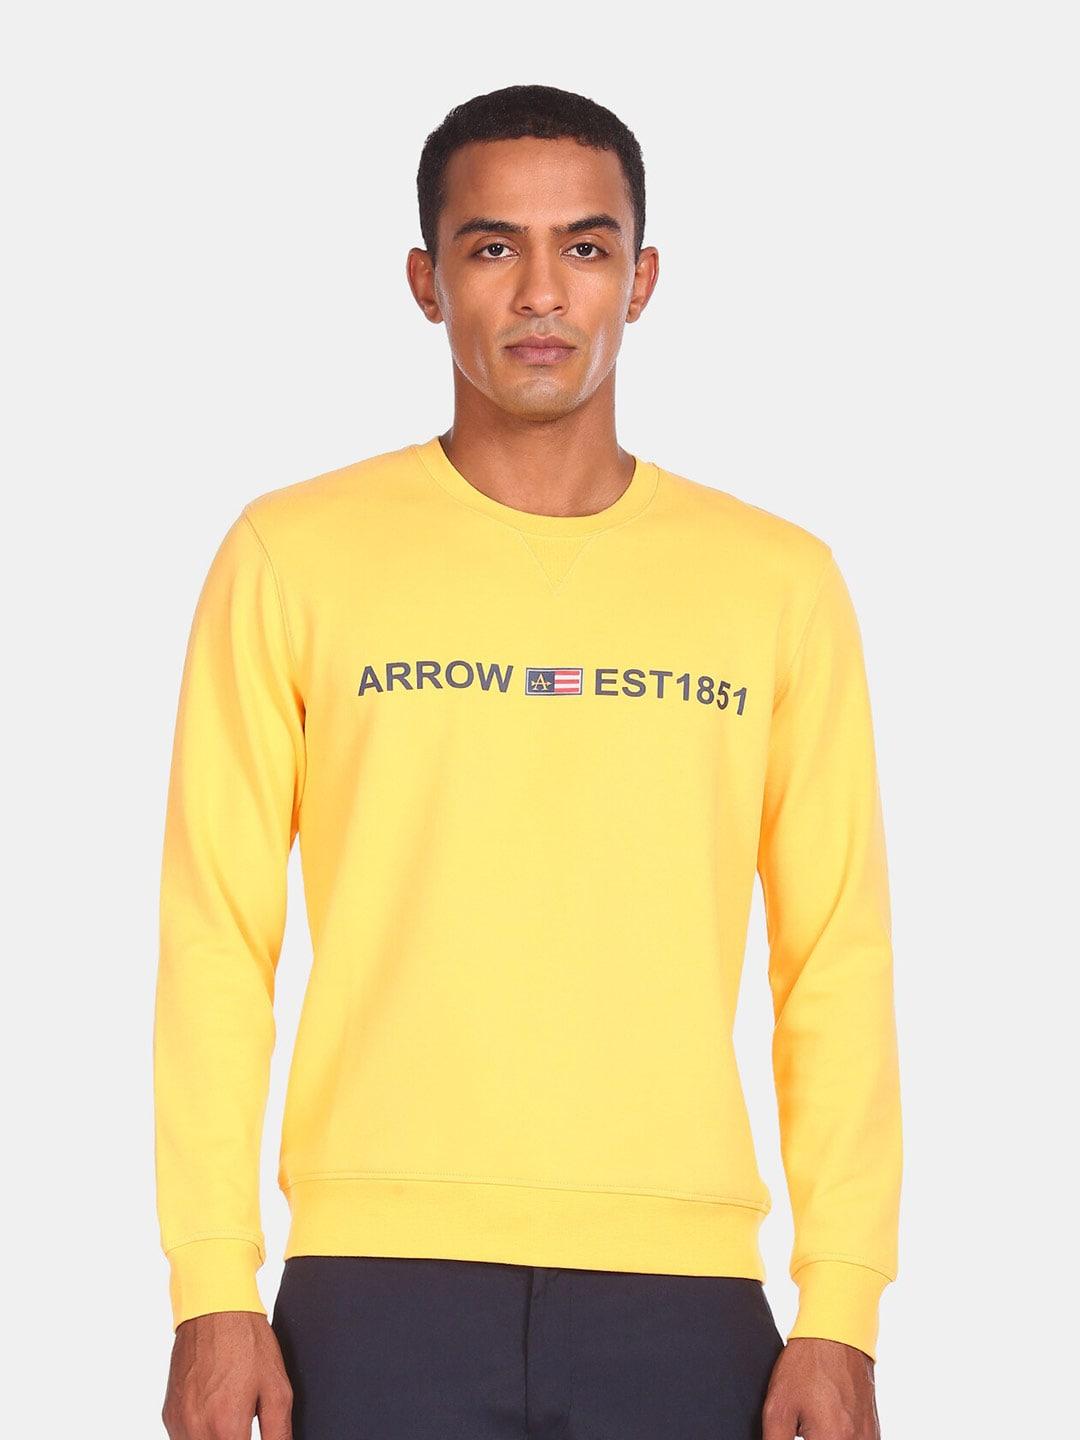 arrow-sport-men-yellow-&-blue-printed-sweatshirt